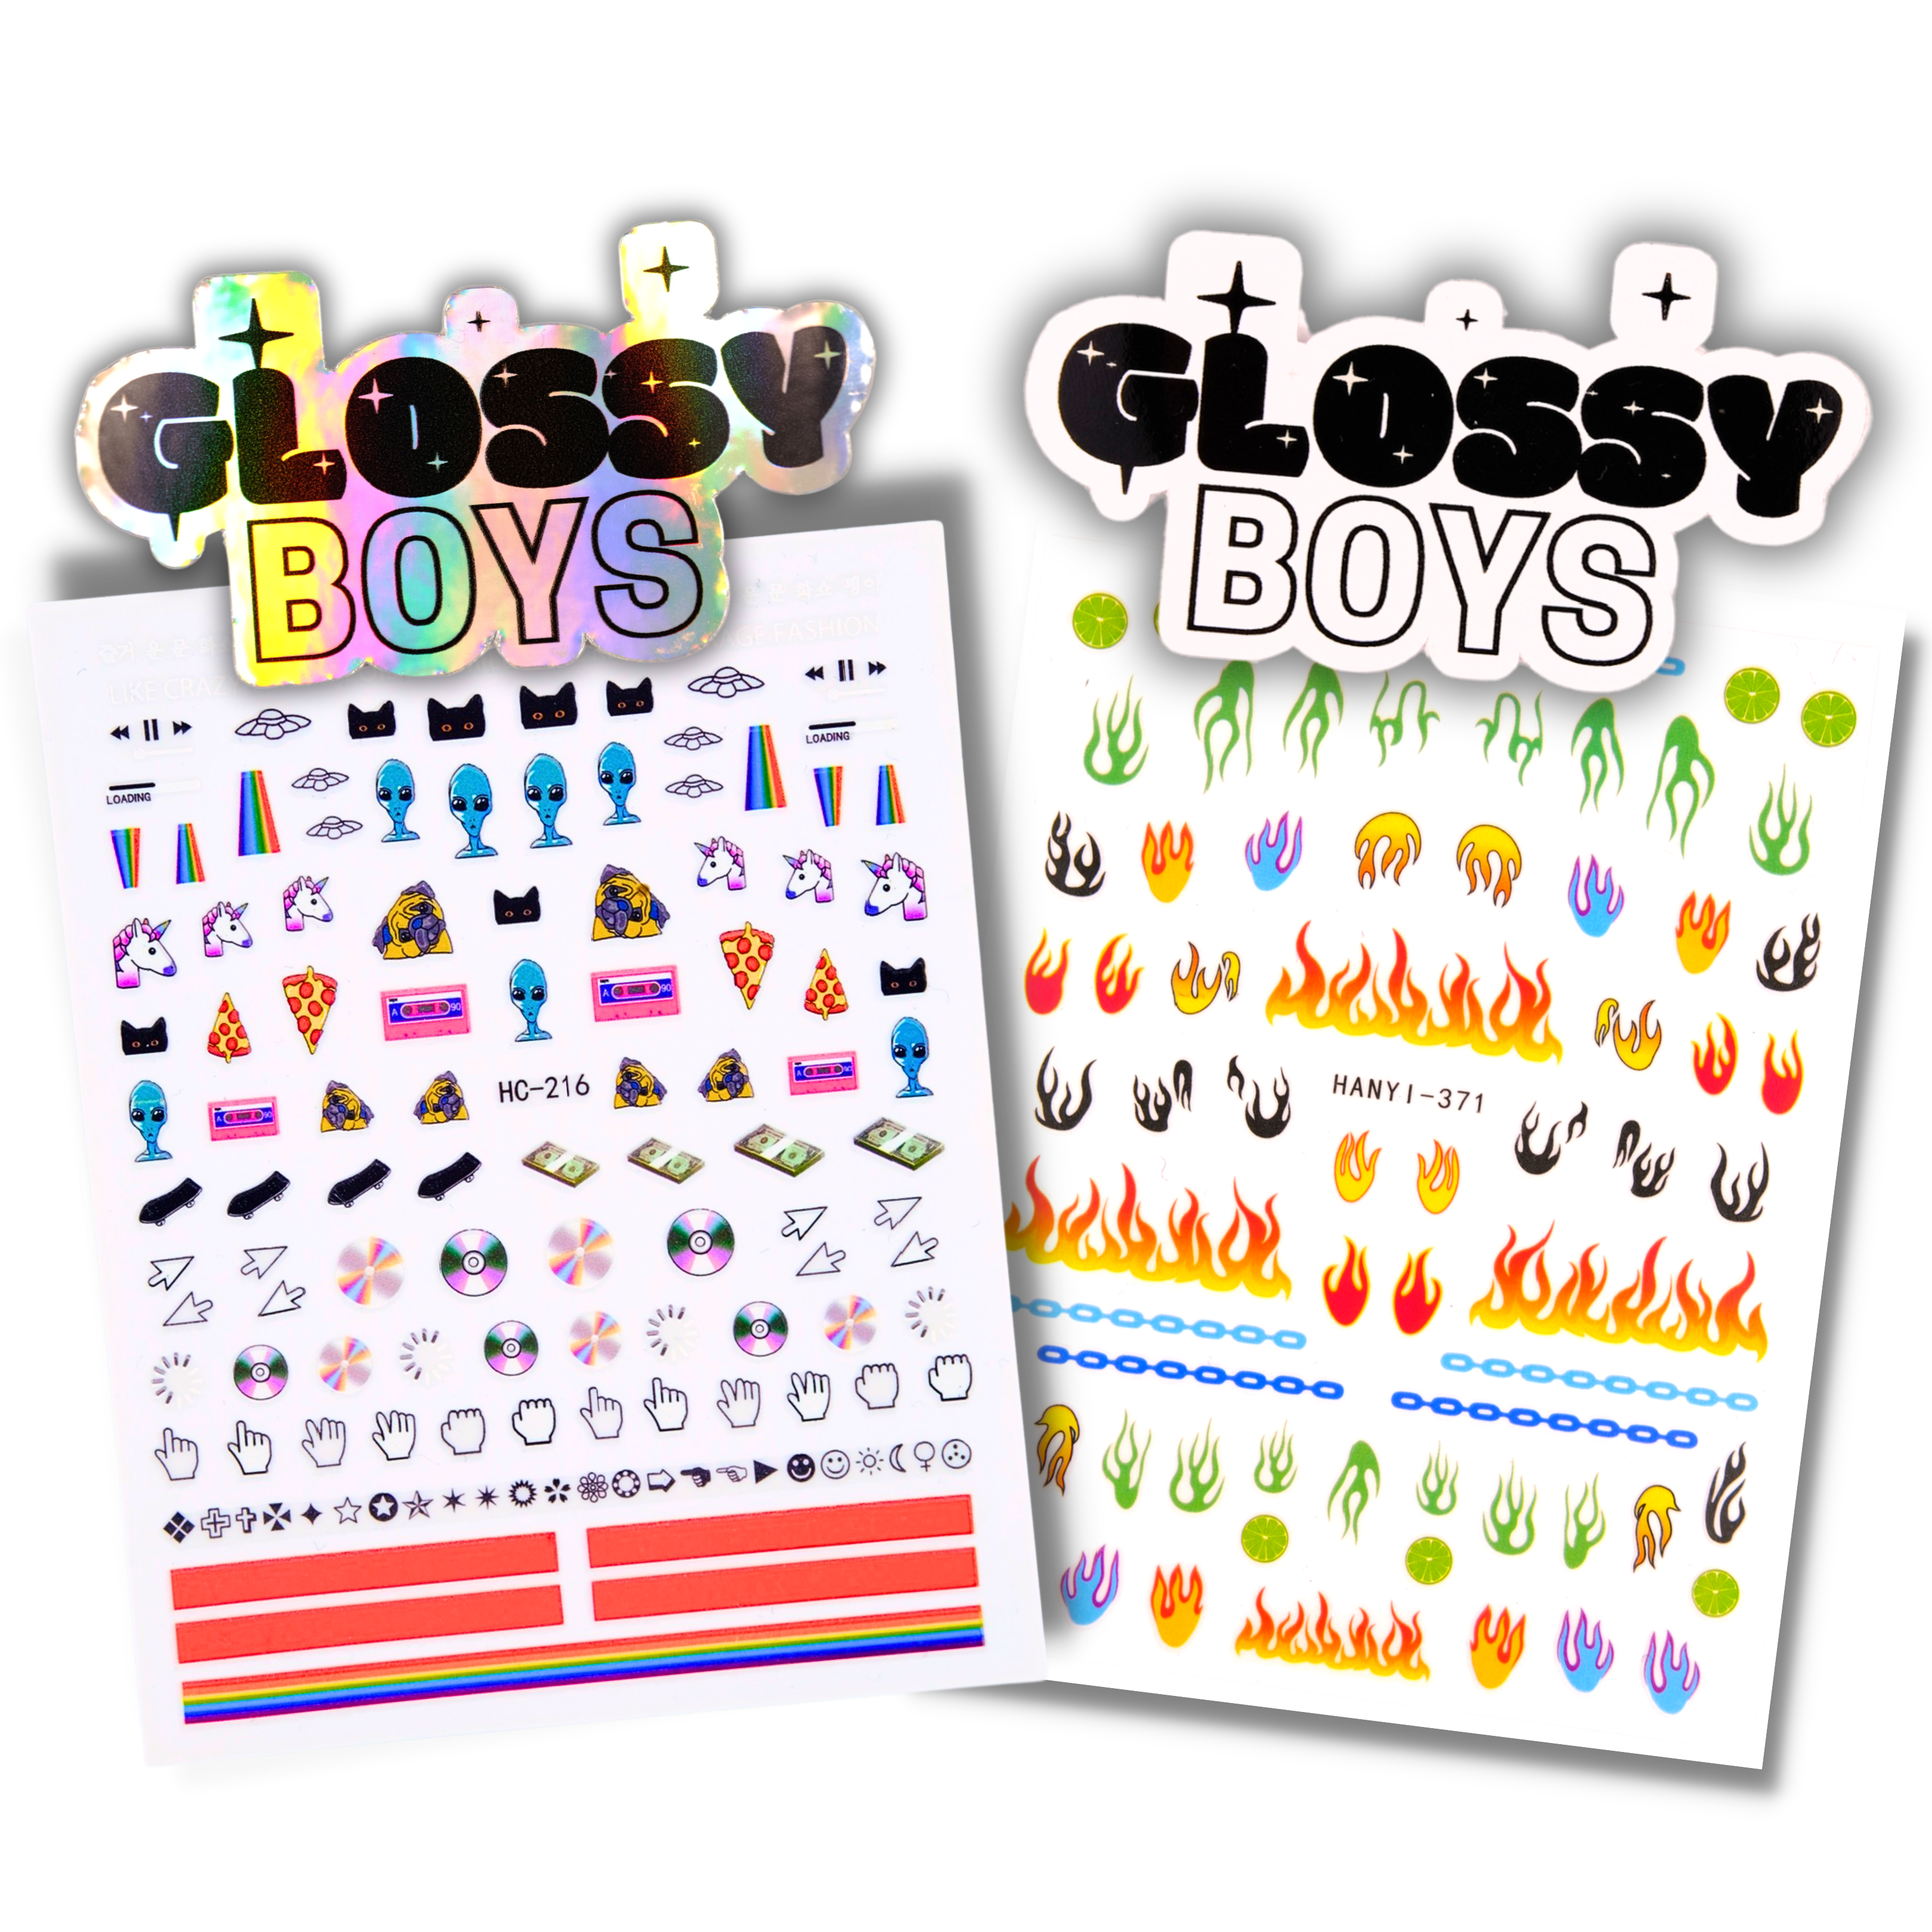 Sticker Pack - Glossy Boys